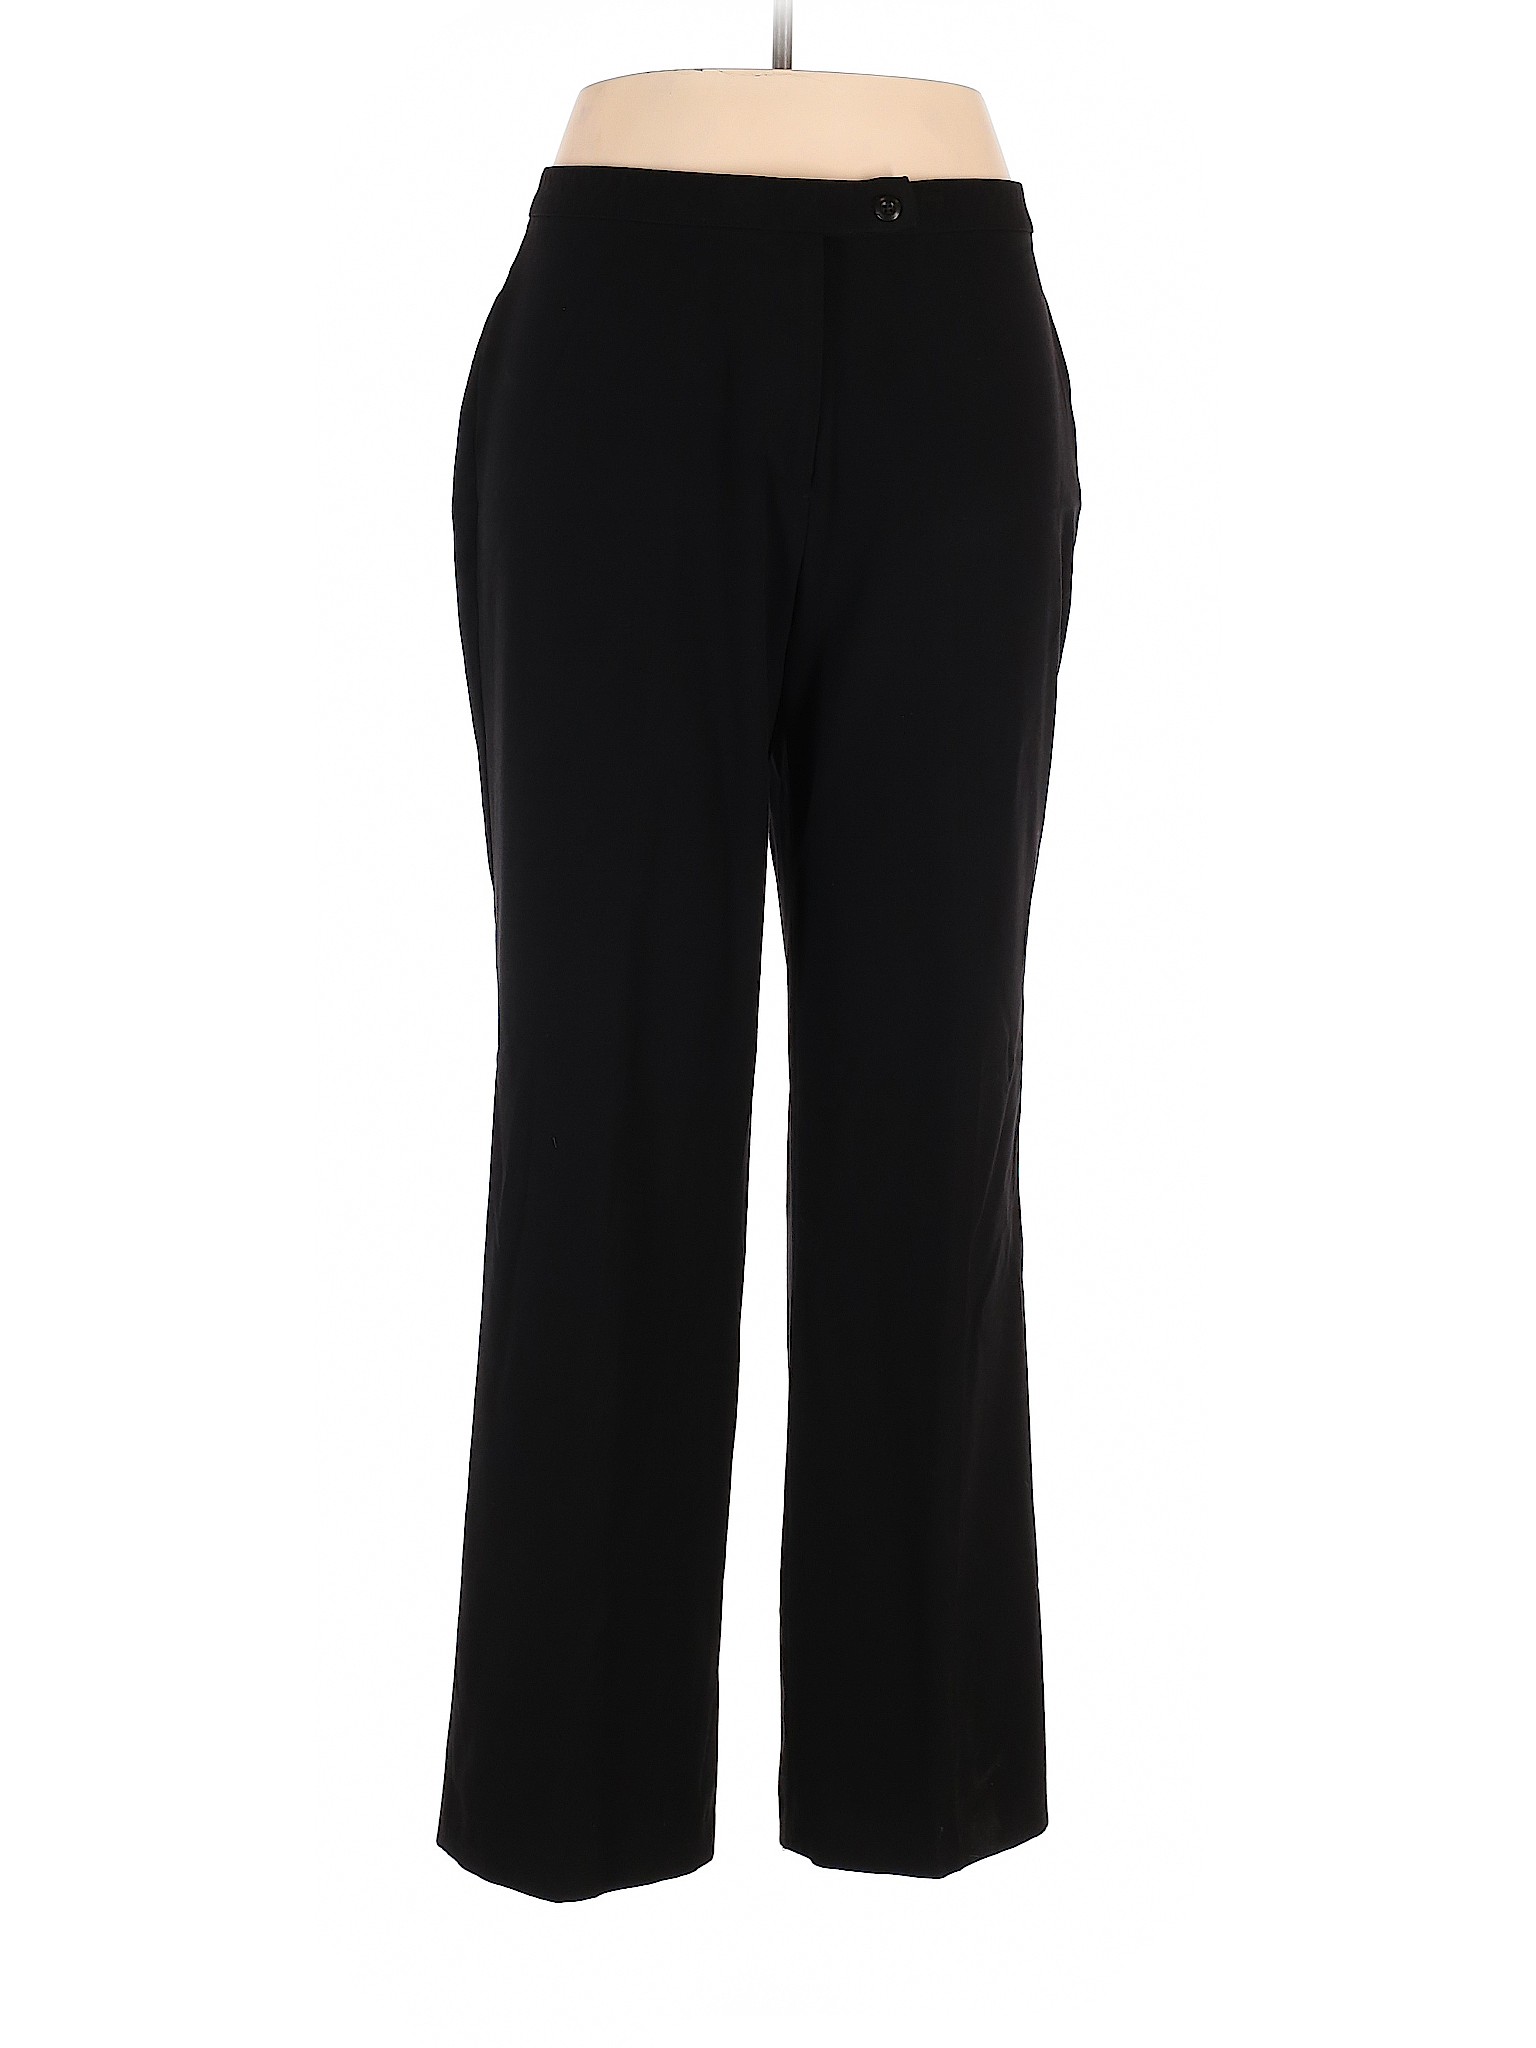 Haggar Women Black Dress Pants 14 | eBay